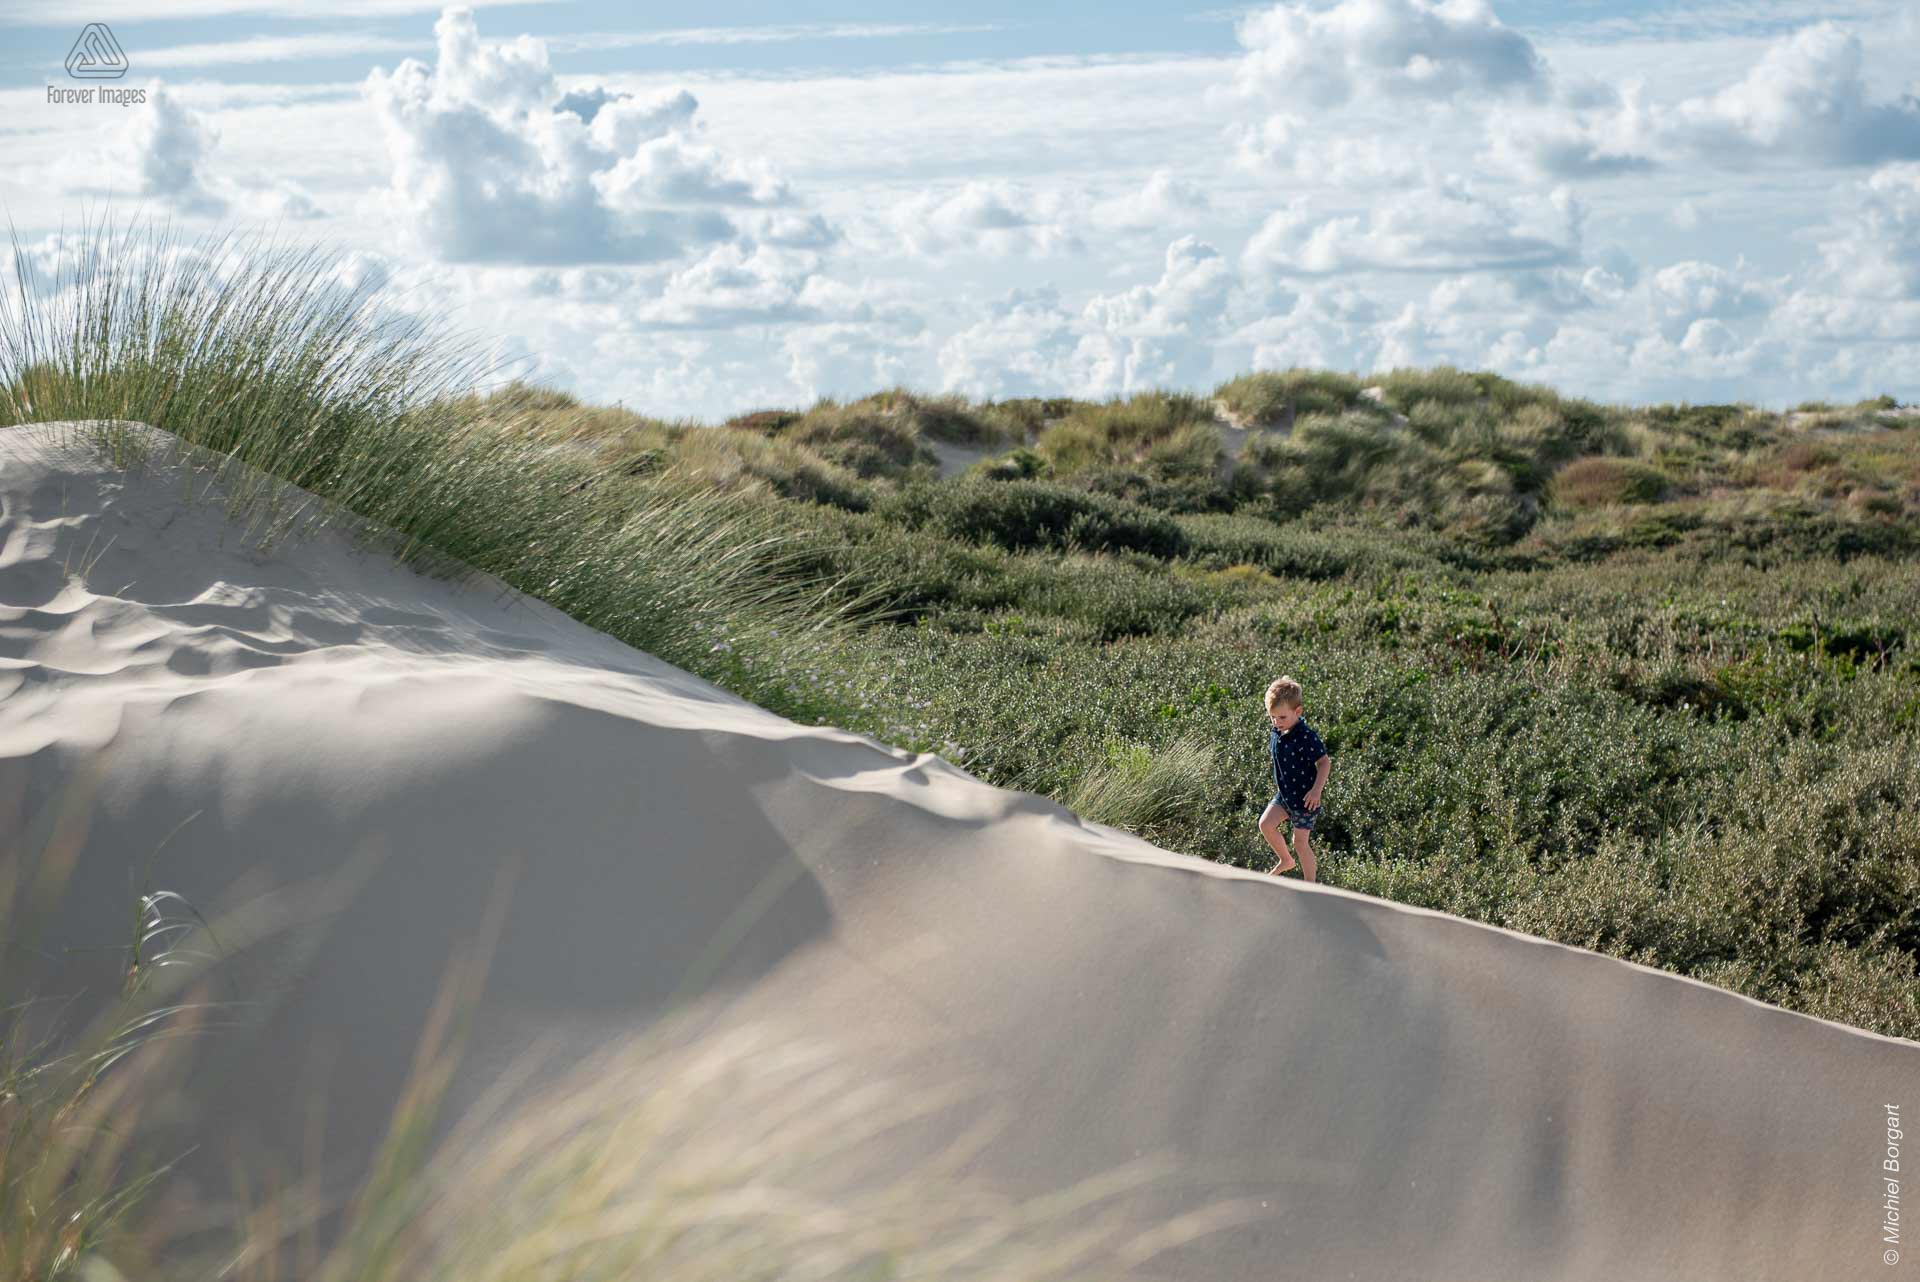 Child photo boy walks on dune | Elias IJmuiden Strand | Portrait Photographer Michiel Borgart - Forever Images.